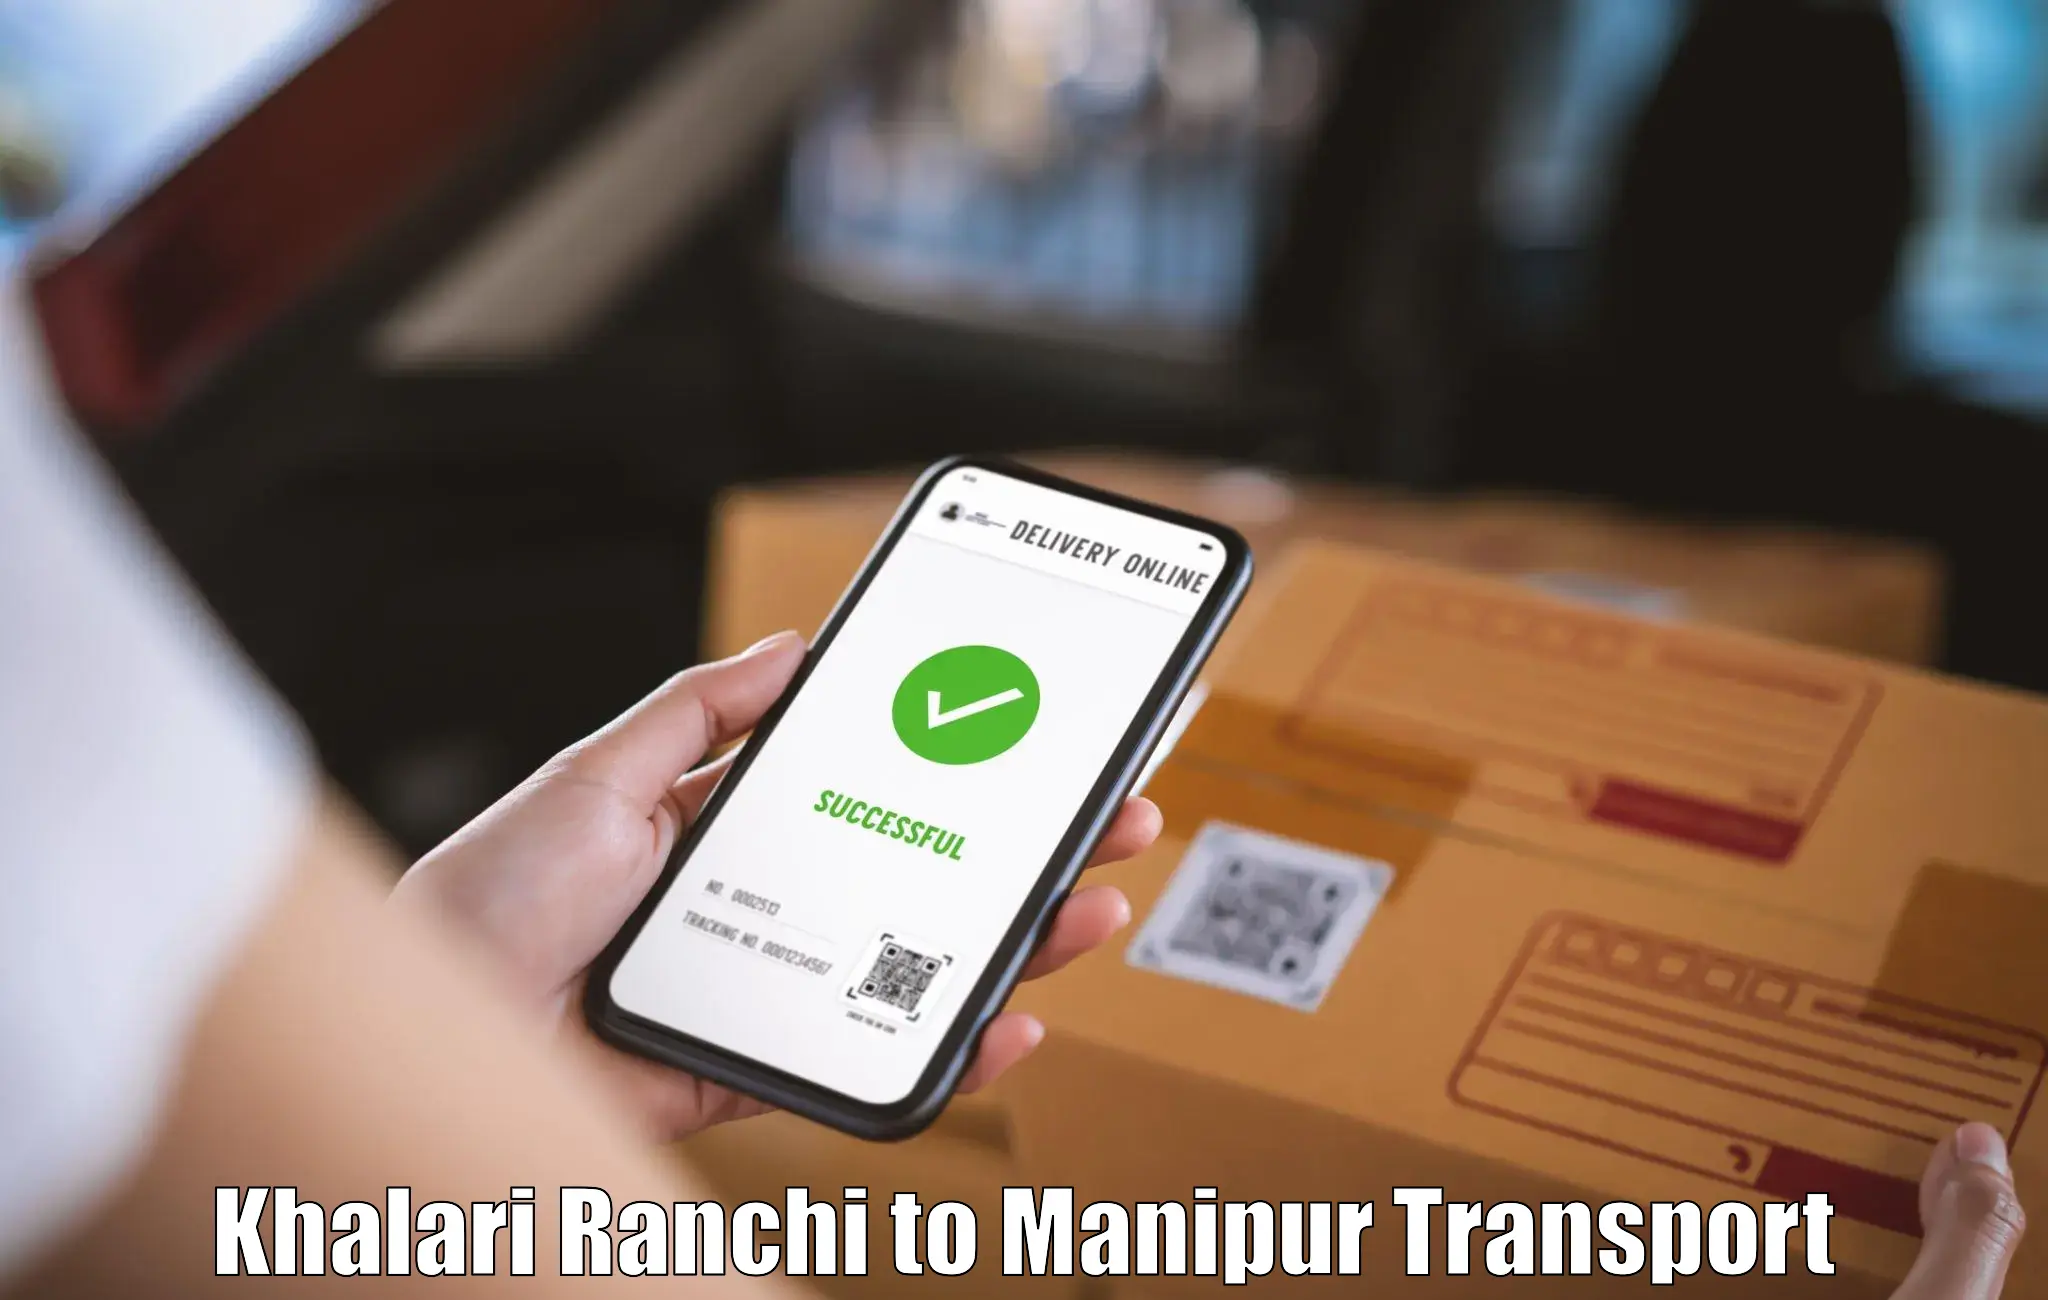 Express transport services Khalari Ranchi to Imphal